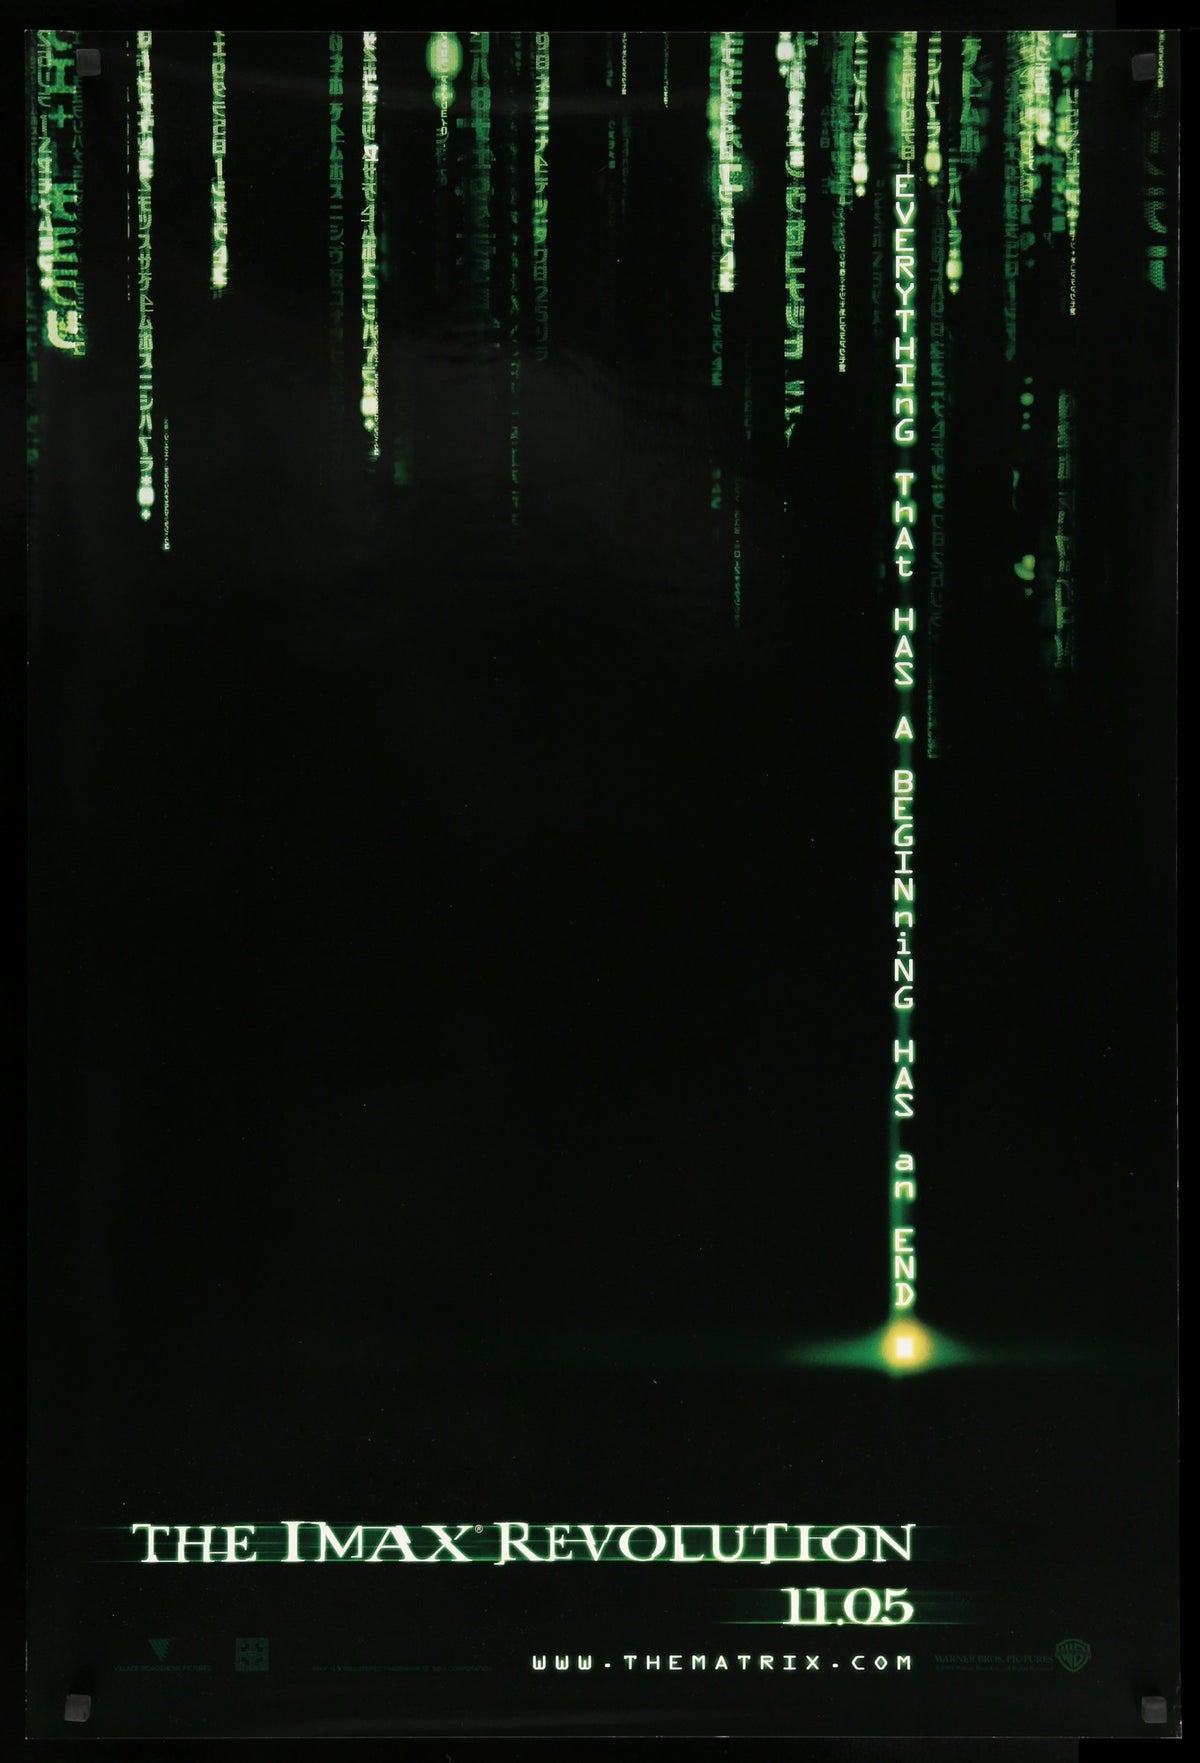 Matrix Revolutions (2003) original movie poster for sale at Original Film Art